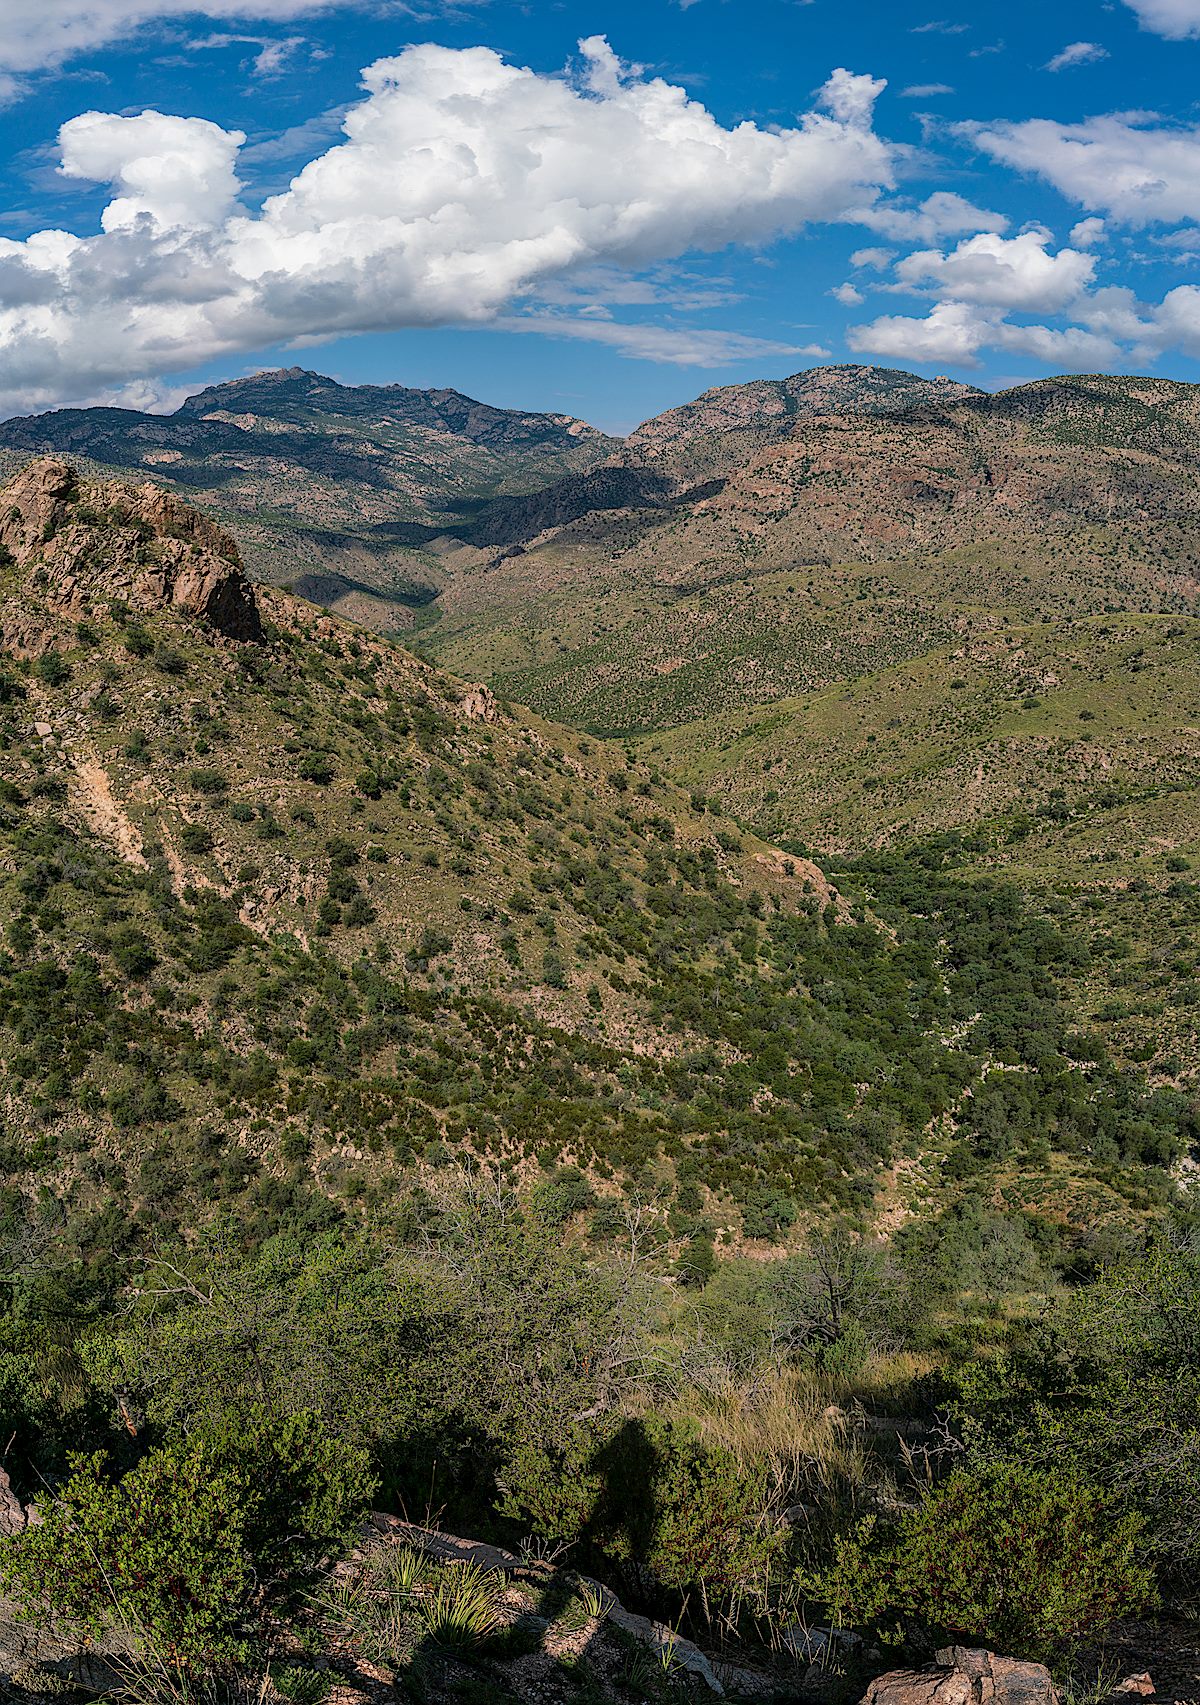 Looking across the Santa Catalina Mountains towards Romero Pass. September 2018.